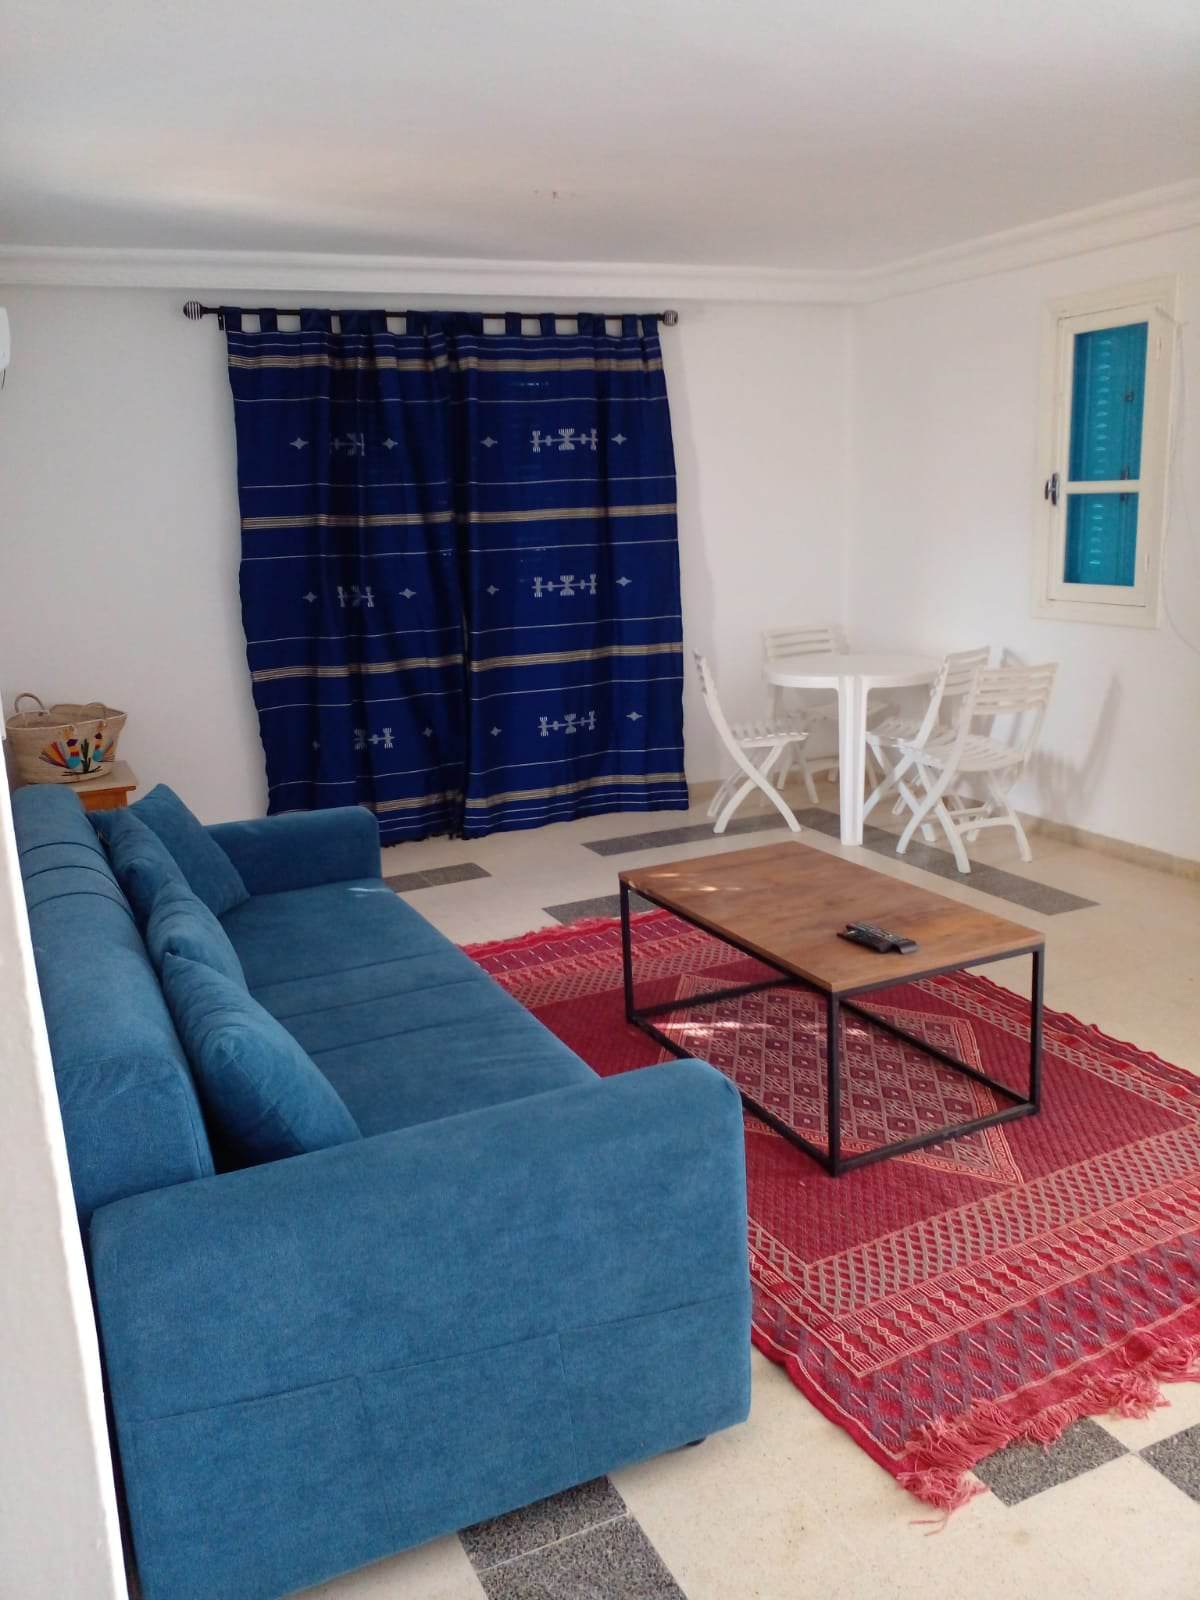 Djerba - Midoun Aghir Vente Appart. 2 pices Six appartements et une villa   djerba